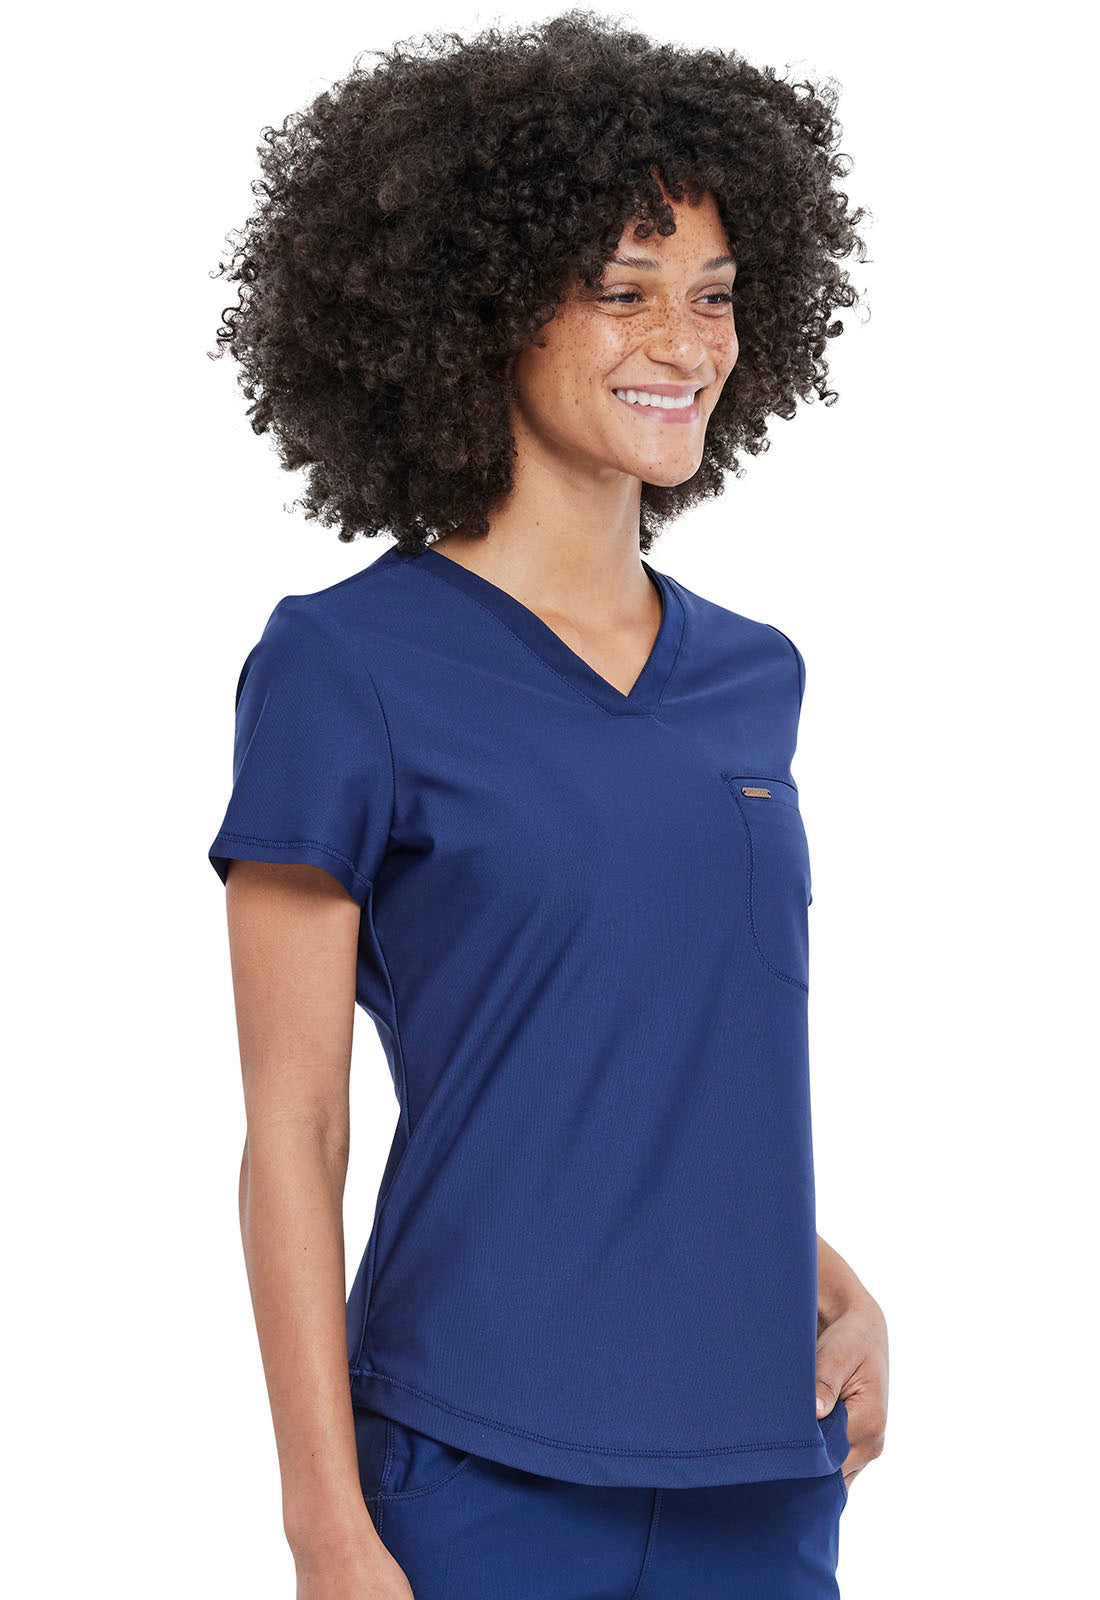 women's medical uniform tops, fashionable nurses uniforms, Women's Cherokee Form Tuckable V-Neck Top